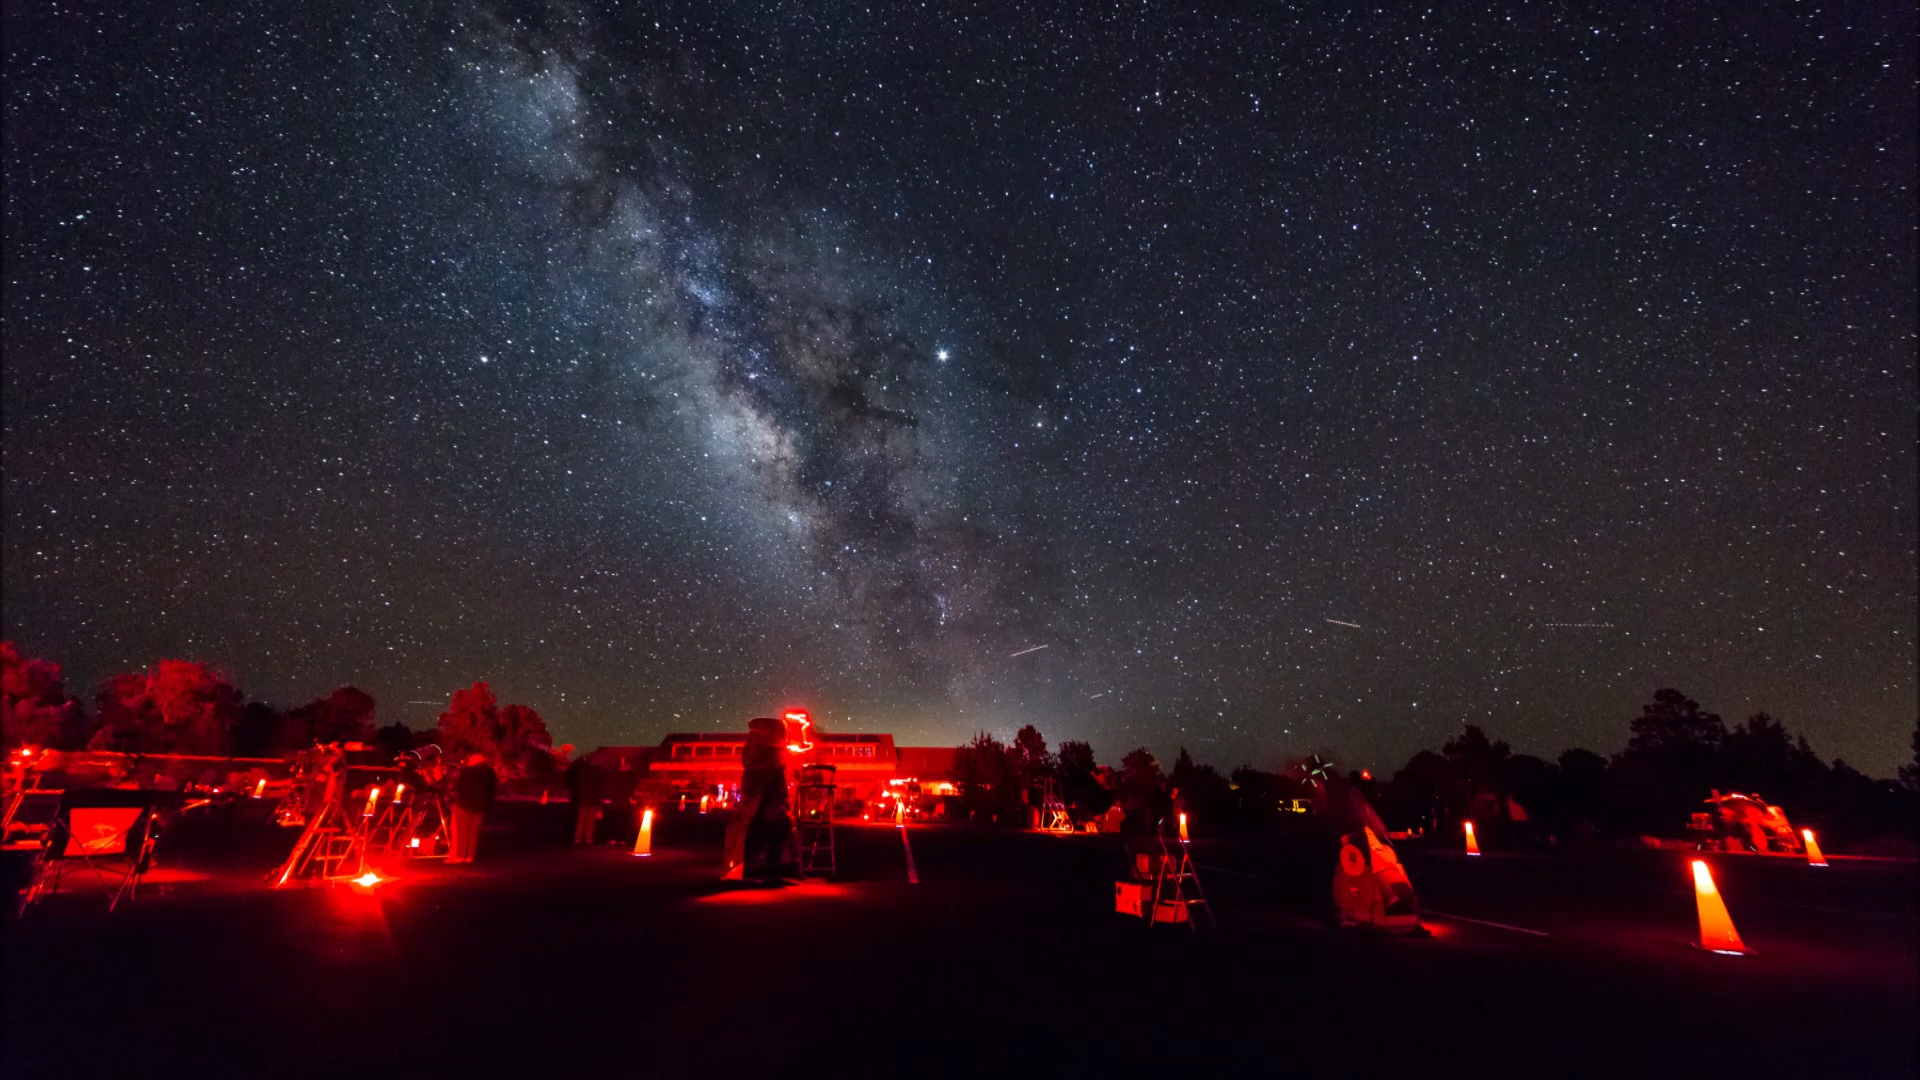 saguaro amateur astronomy club Adult Pictures